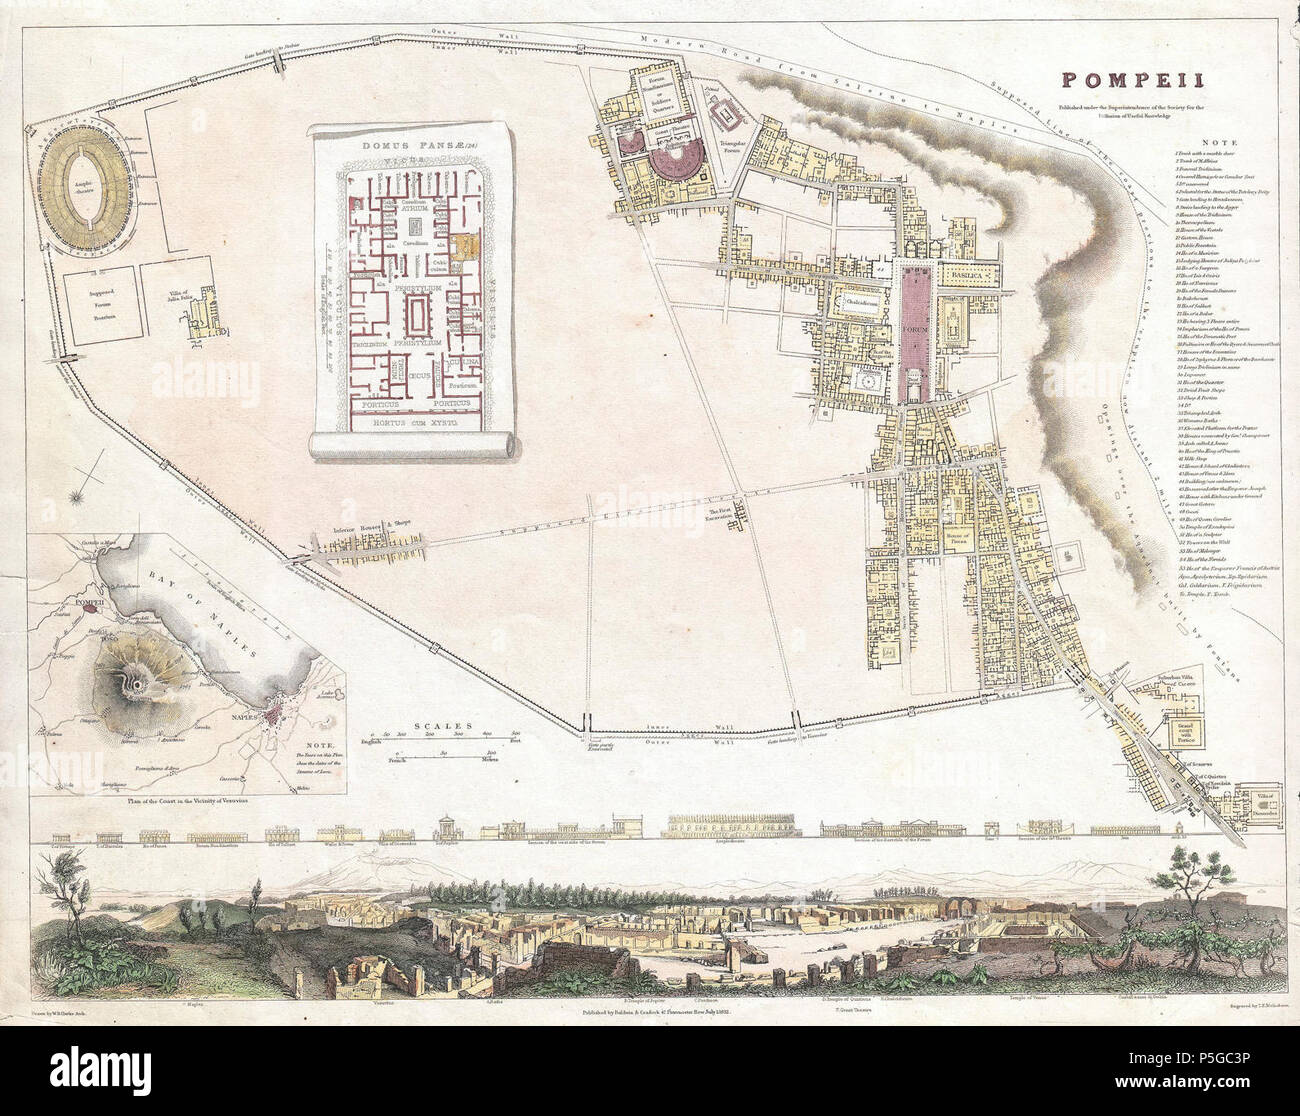 1832 S.D.U.K. City Plan or Map of Pompeii, Italy - Geographicus - Pompeii-SDUK-1832. Stock Photo